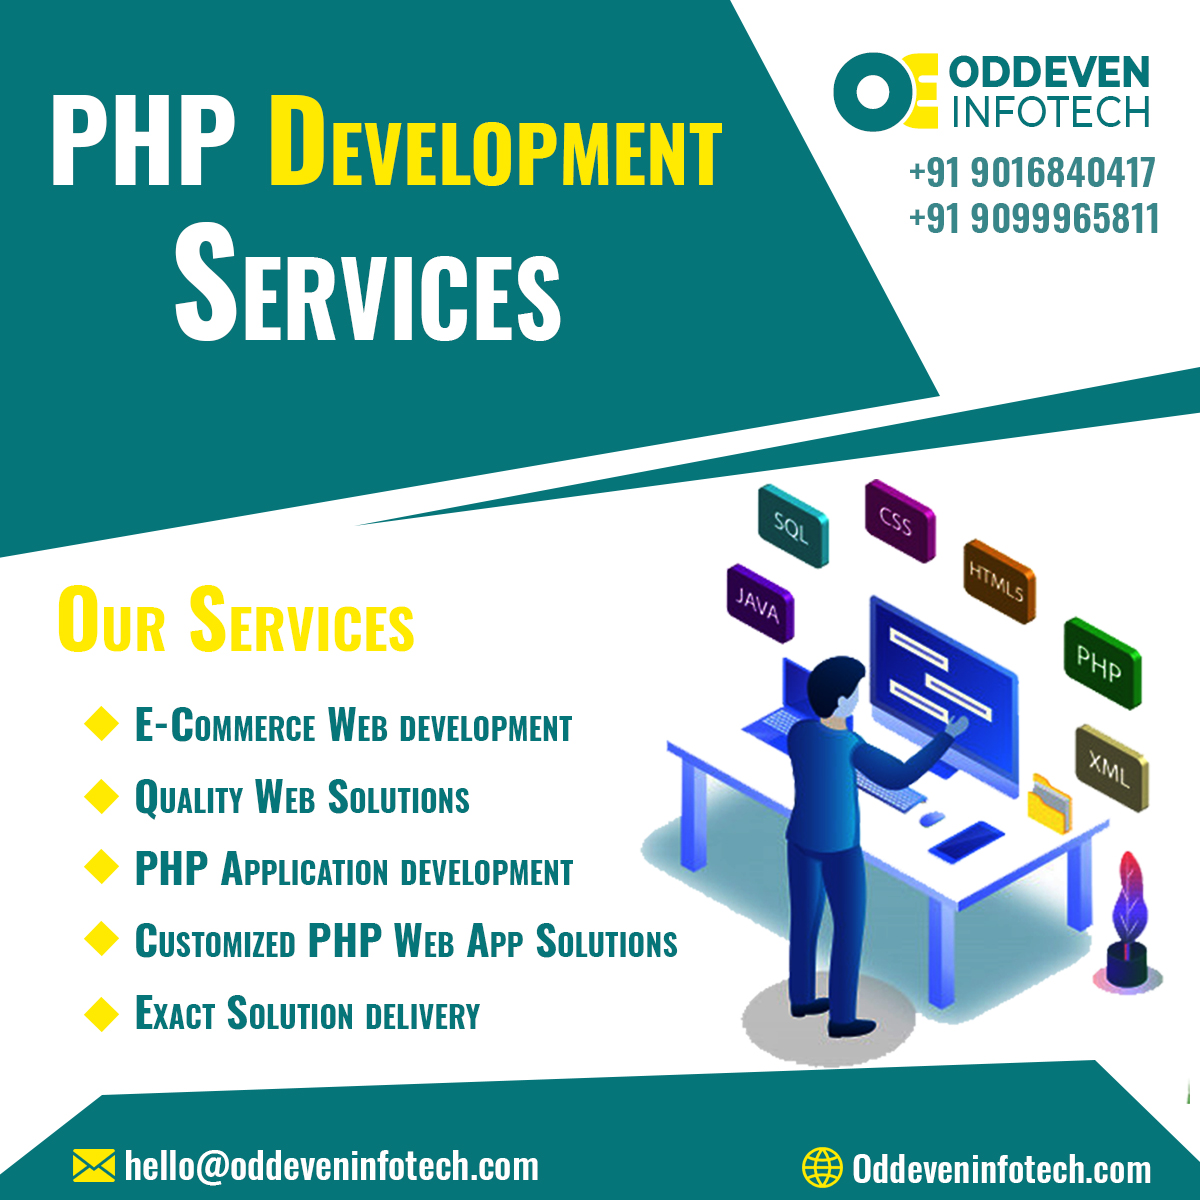 PHP Devlopment Services - OddEven Infotech